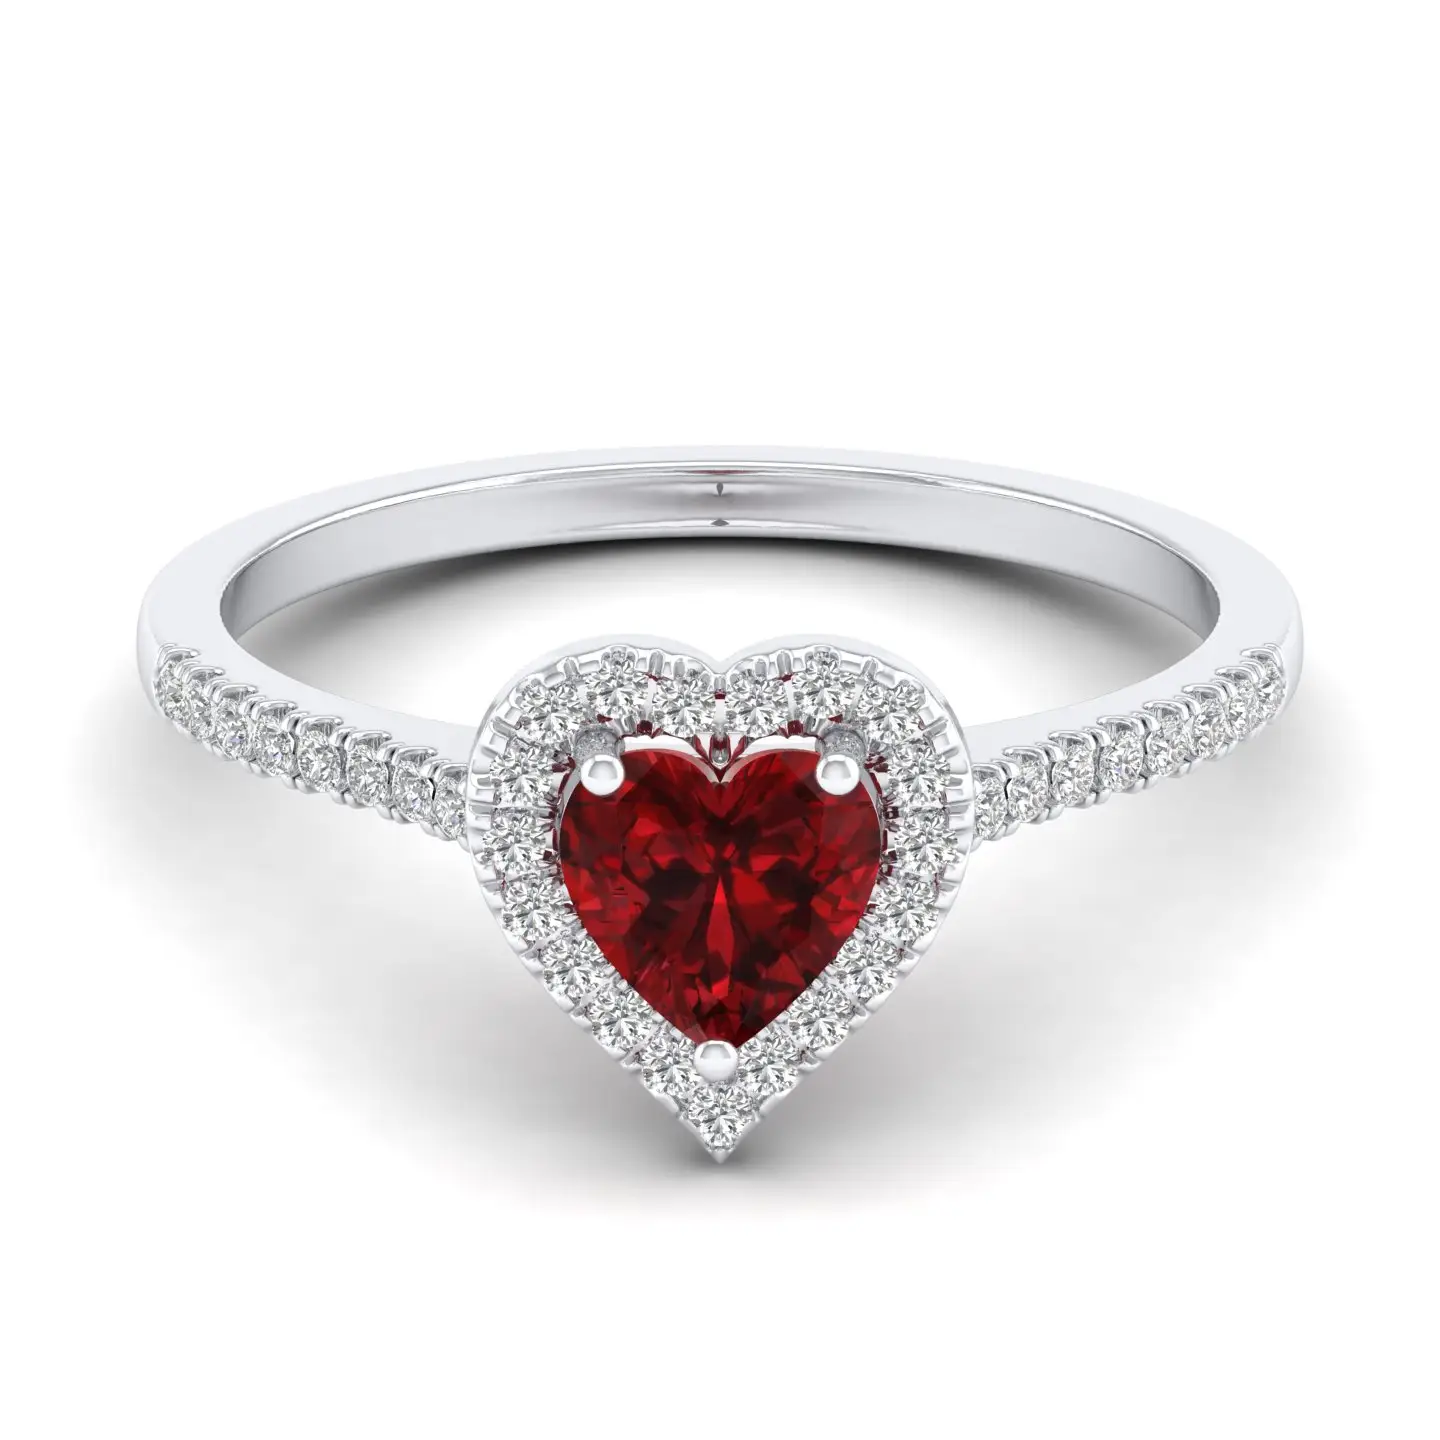 Antique Garnet Solid 18k White Gold Ring for Women Natural Diamond Red Garnet Multi Stone Setting Ring Large Gemstones Ring